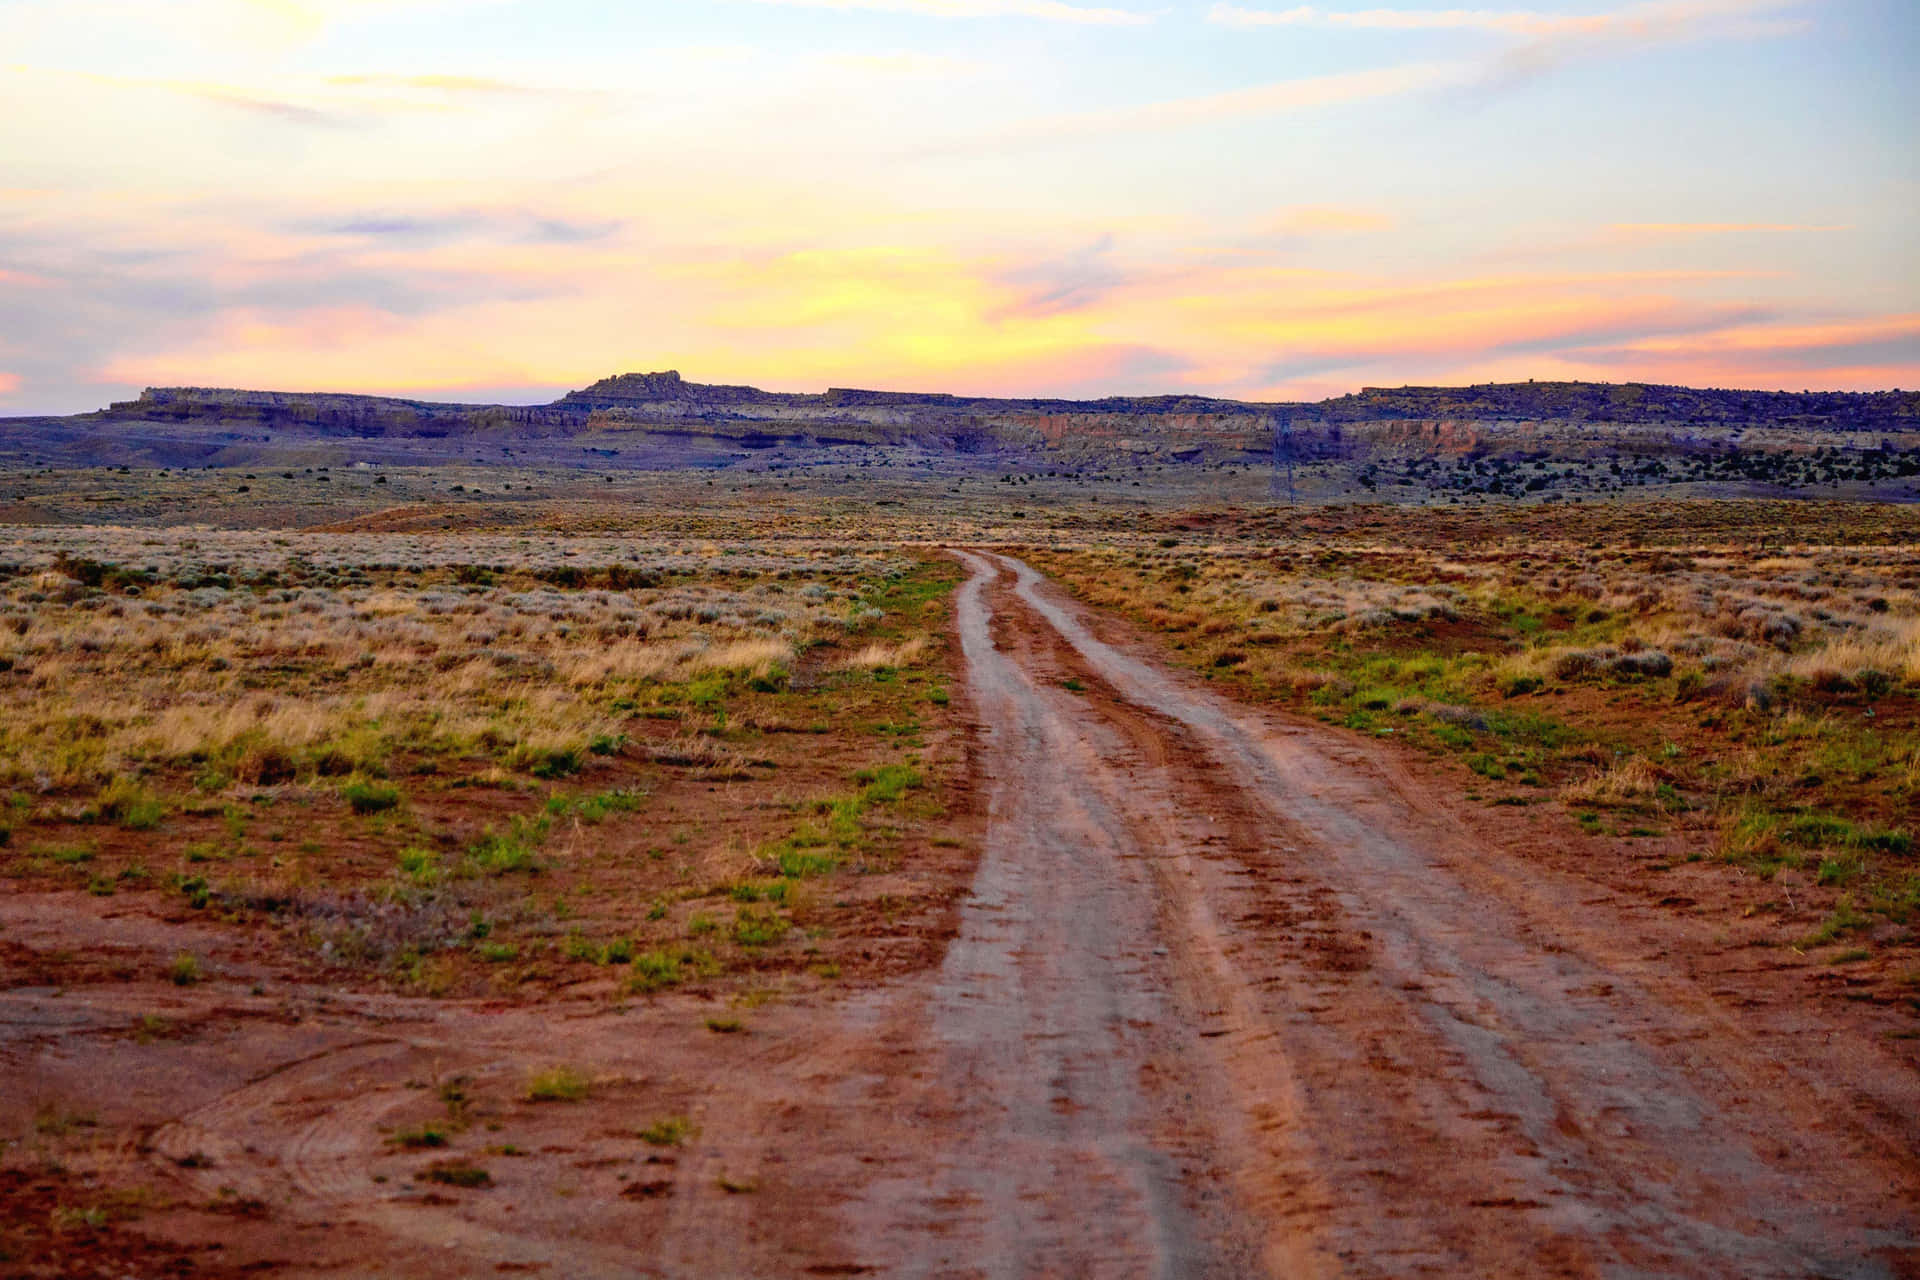 A Dirt Road In The Desert